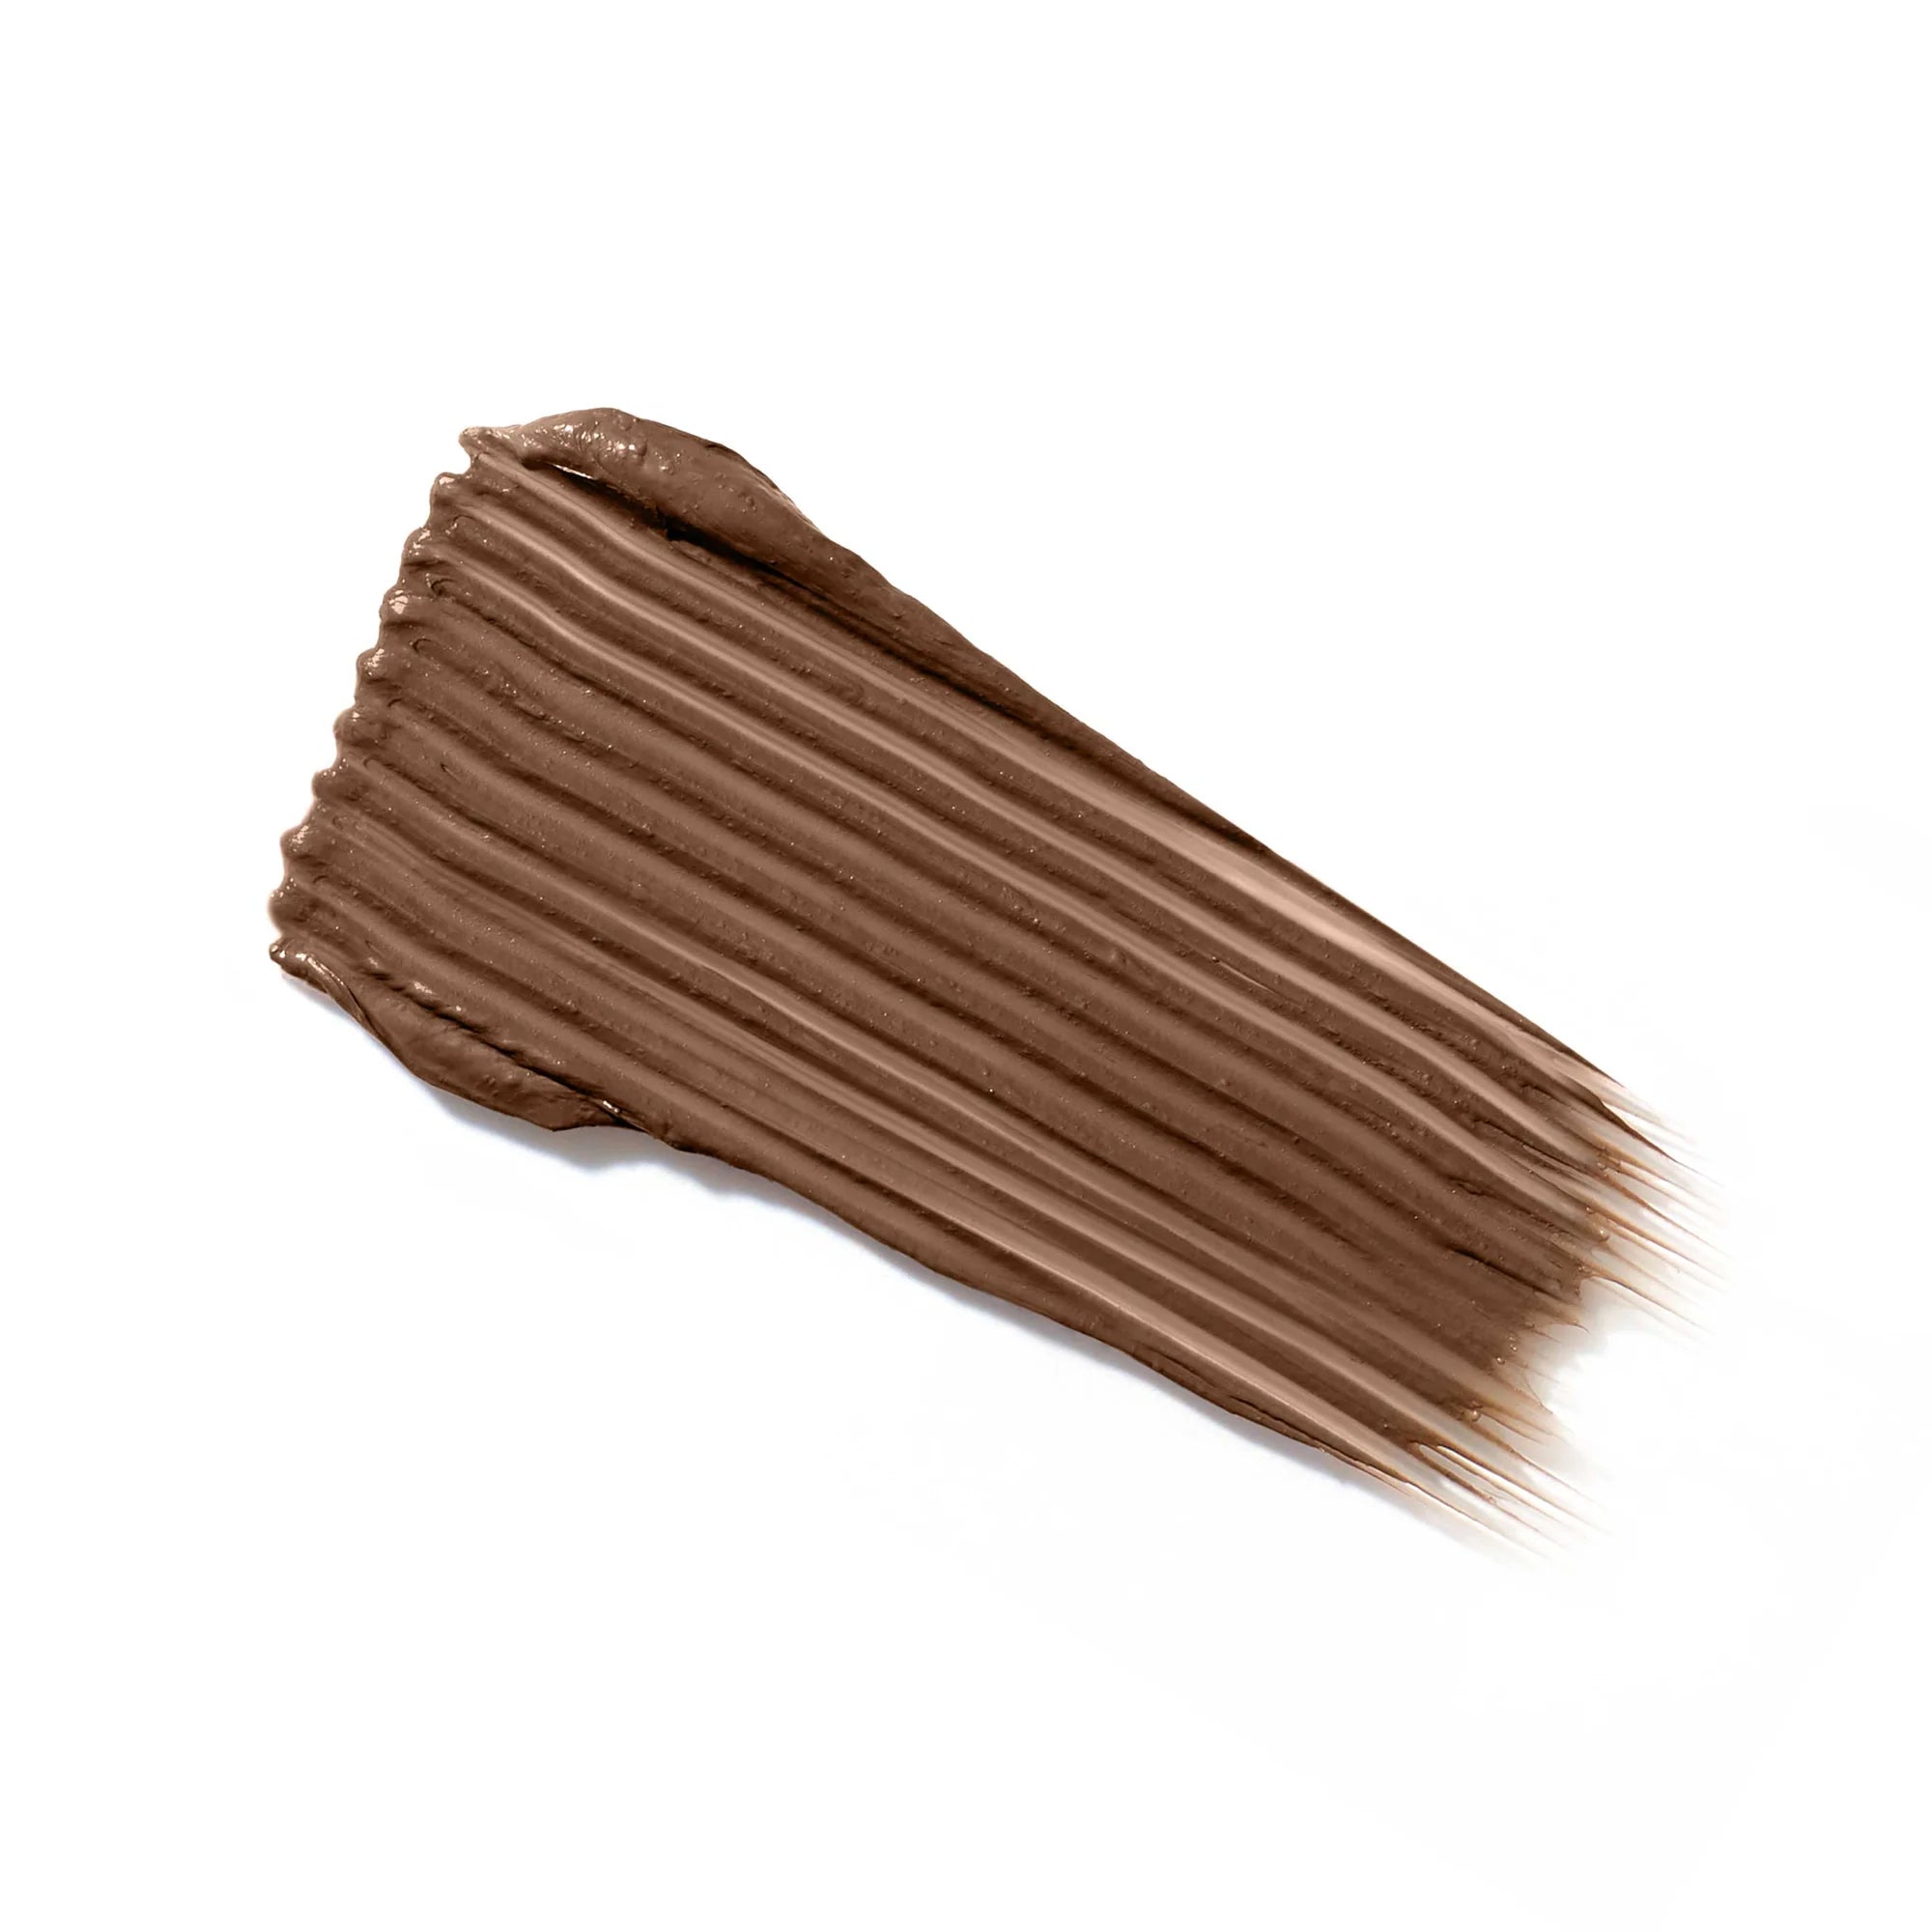 Jane Iredale's PureBrow® Medium Brown Brow Gel